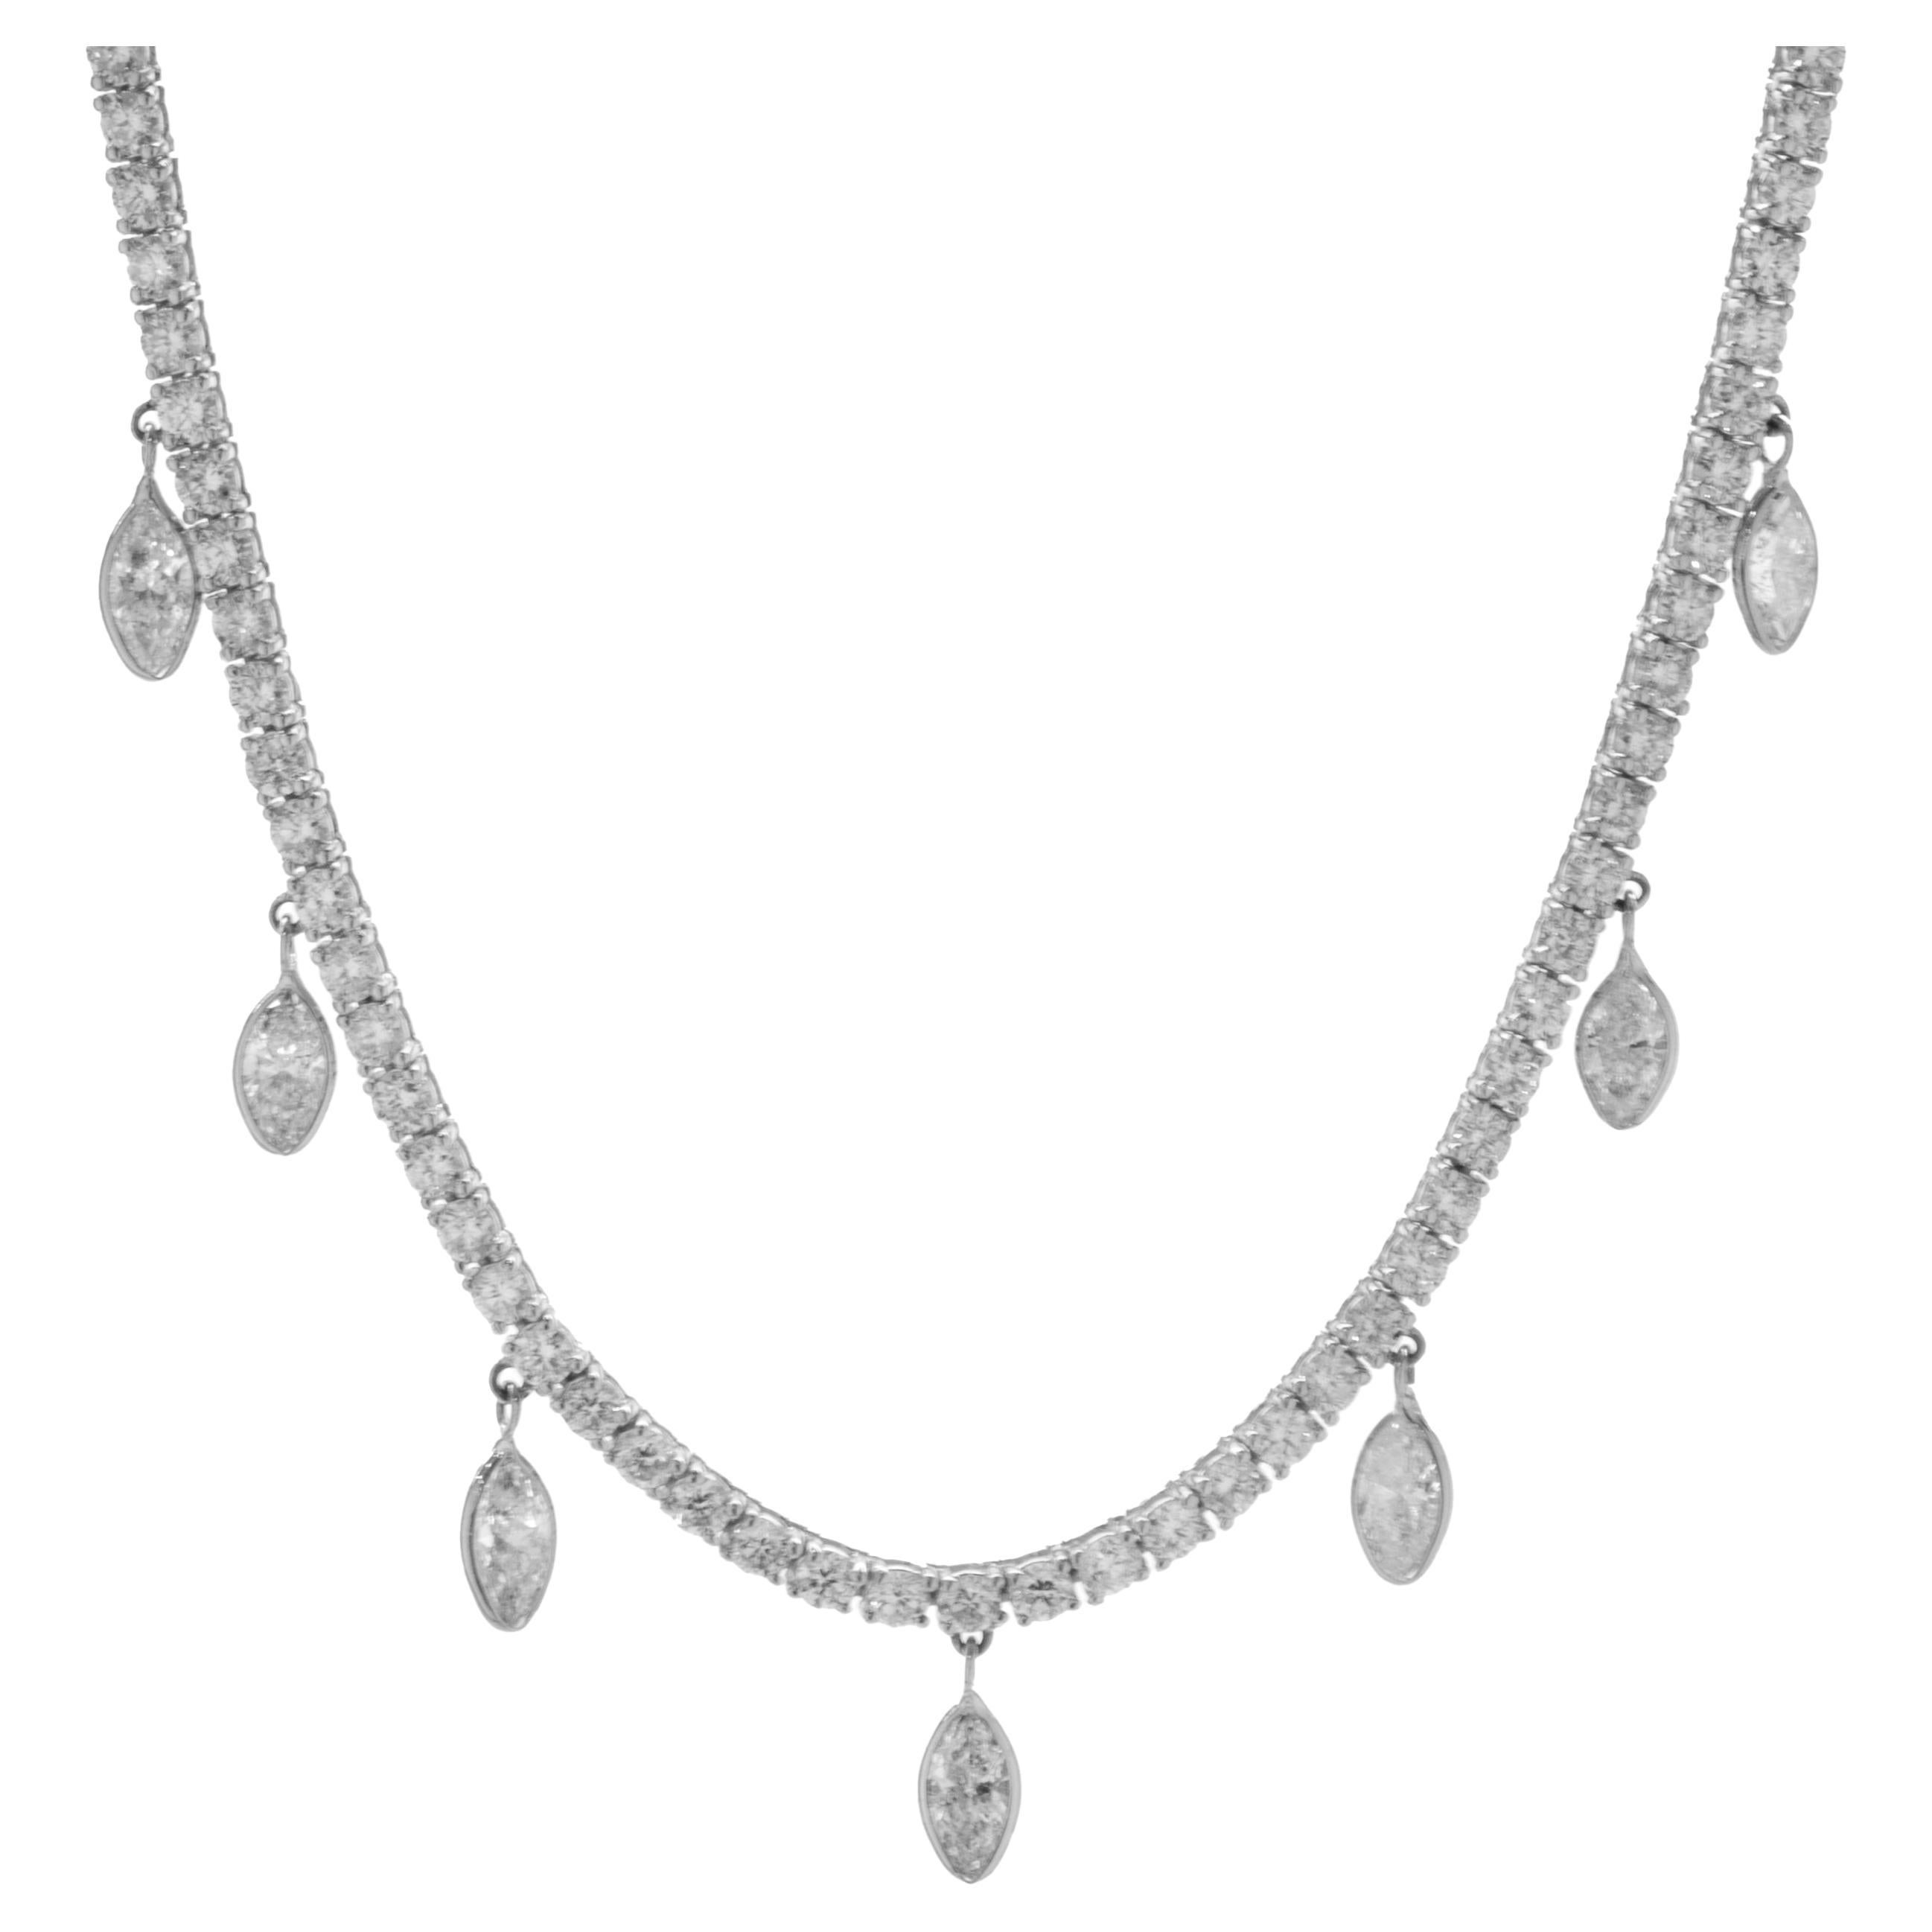 14k White Gold Diamond Tennis Necklace with Bezel Set Marquise Diamond Drops